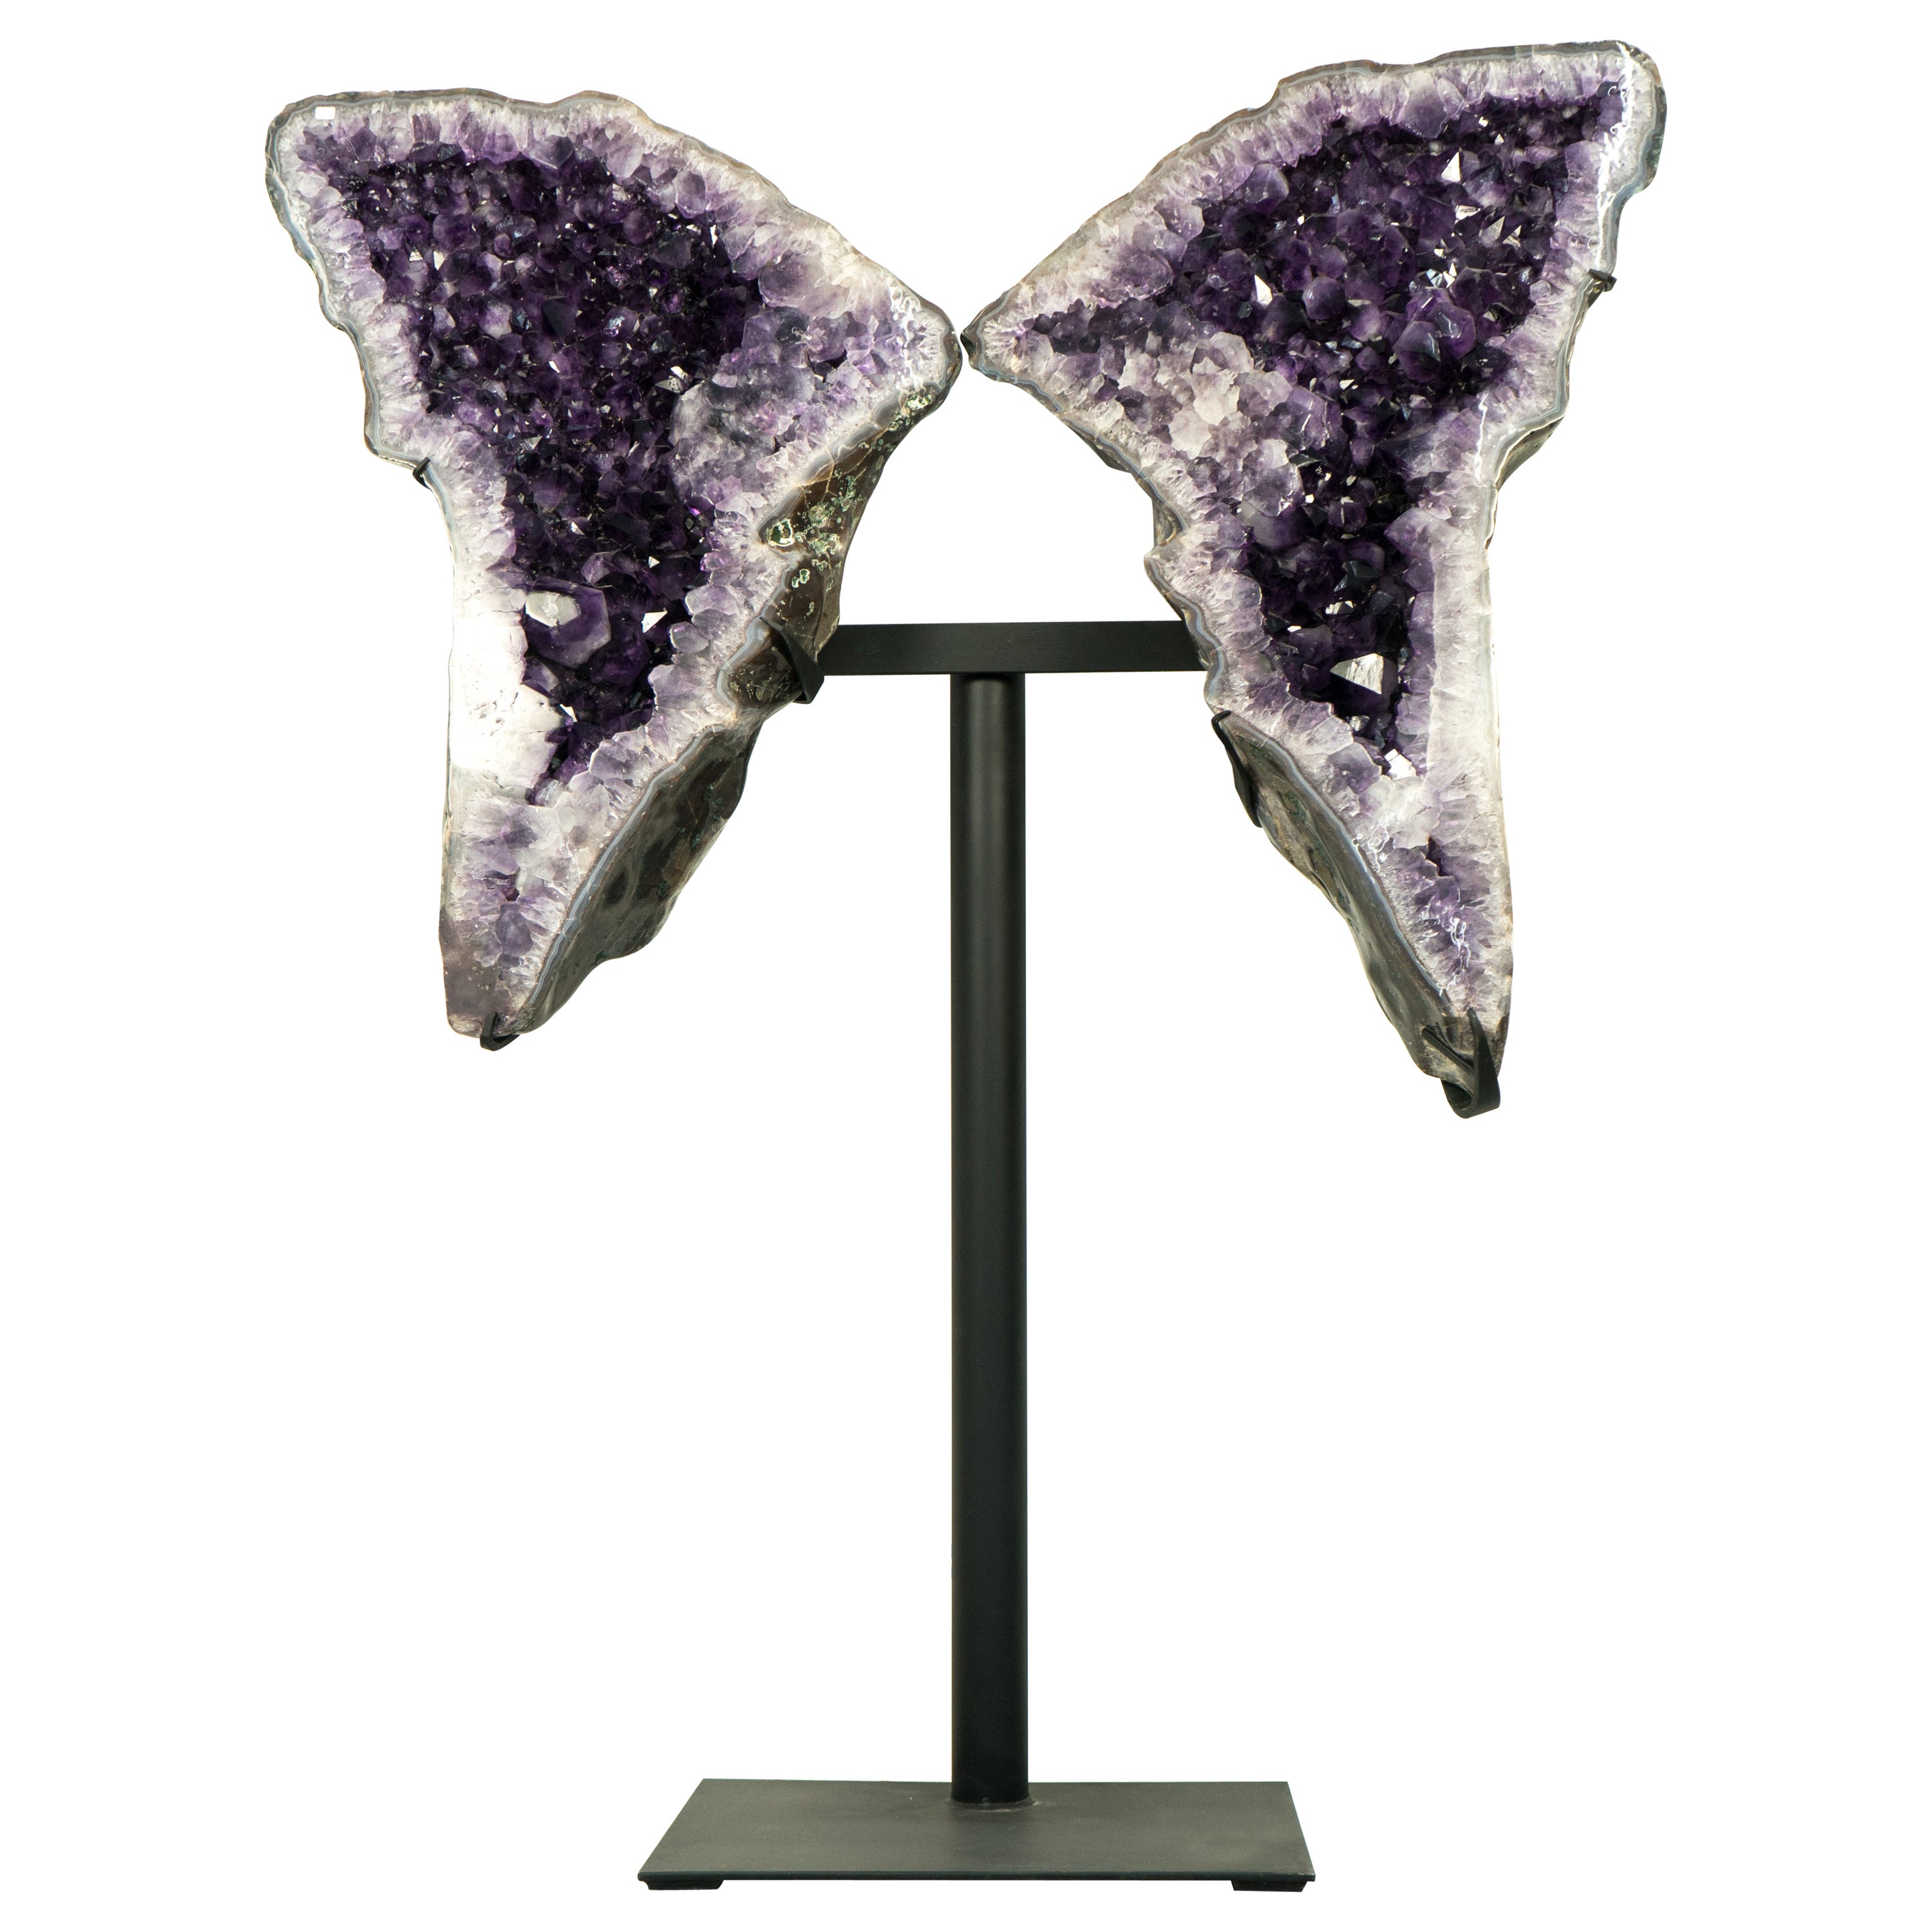 Skulpturale große Amethystgeode Butterly Wings, hochgradiger tiefvioletter Amethyst